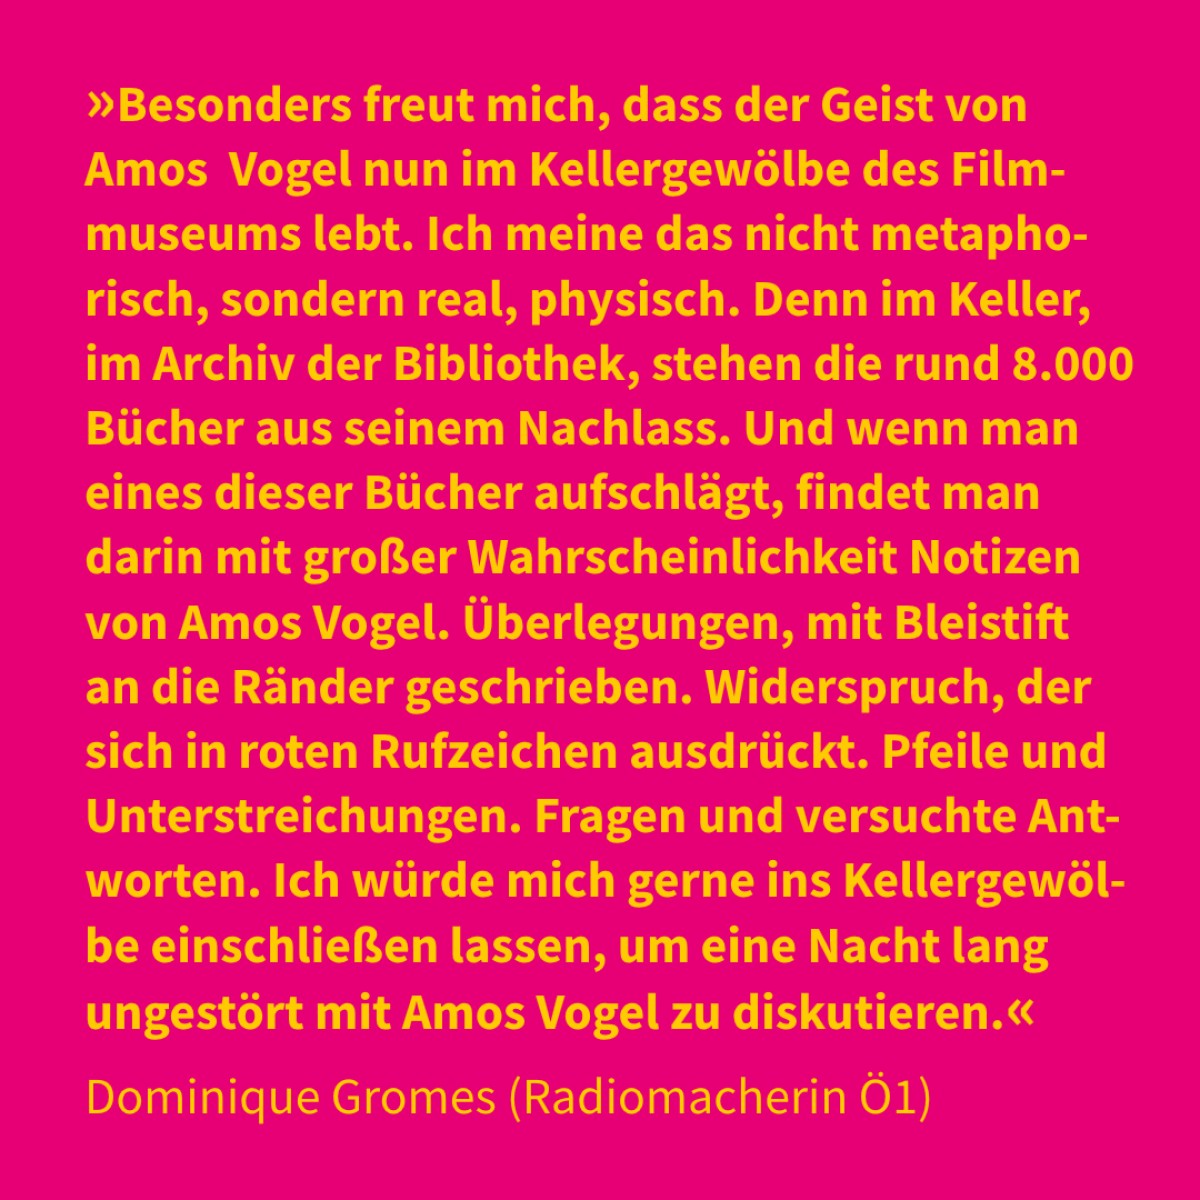 Dominique Gromes (Radiomacherin Ö1)